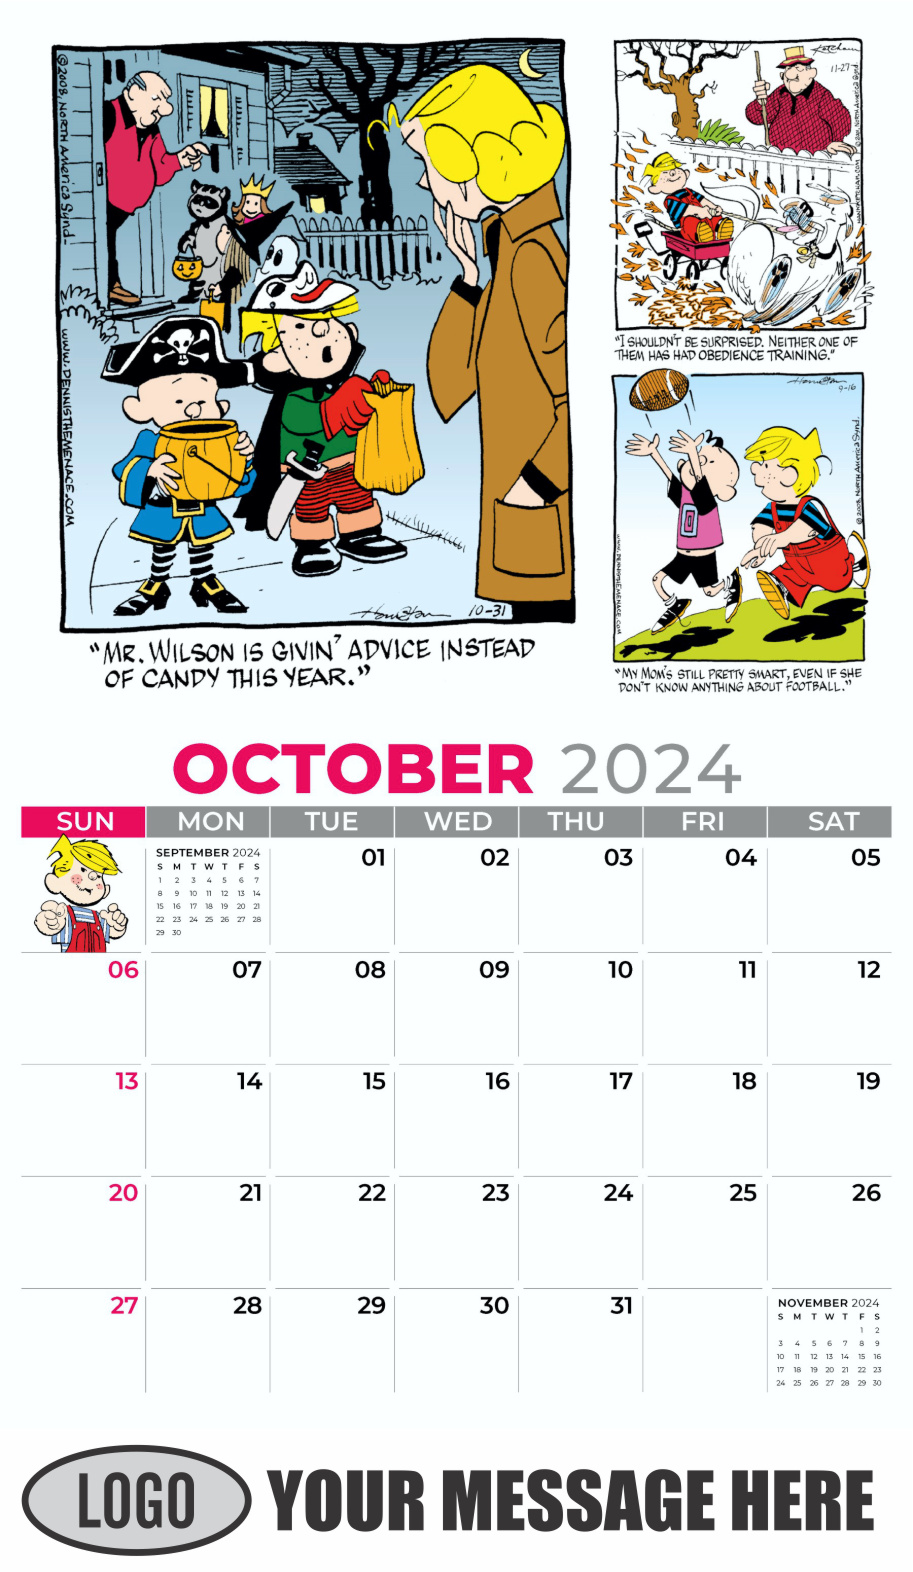 Dennis the Menace 2024 Business Promotional Wall Calendar - October